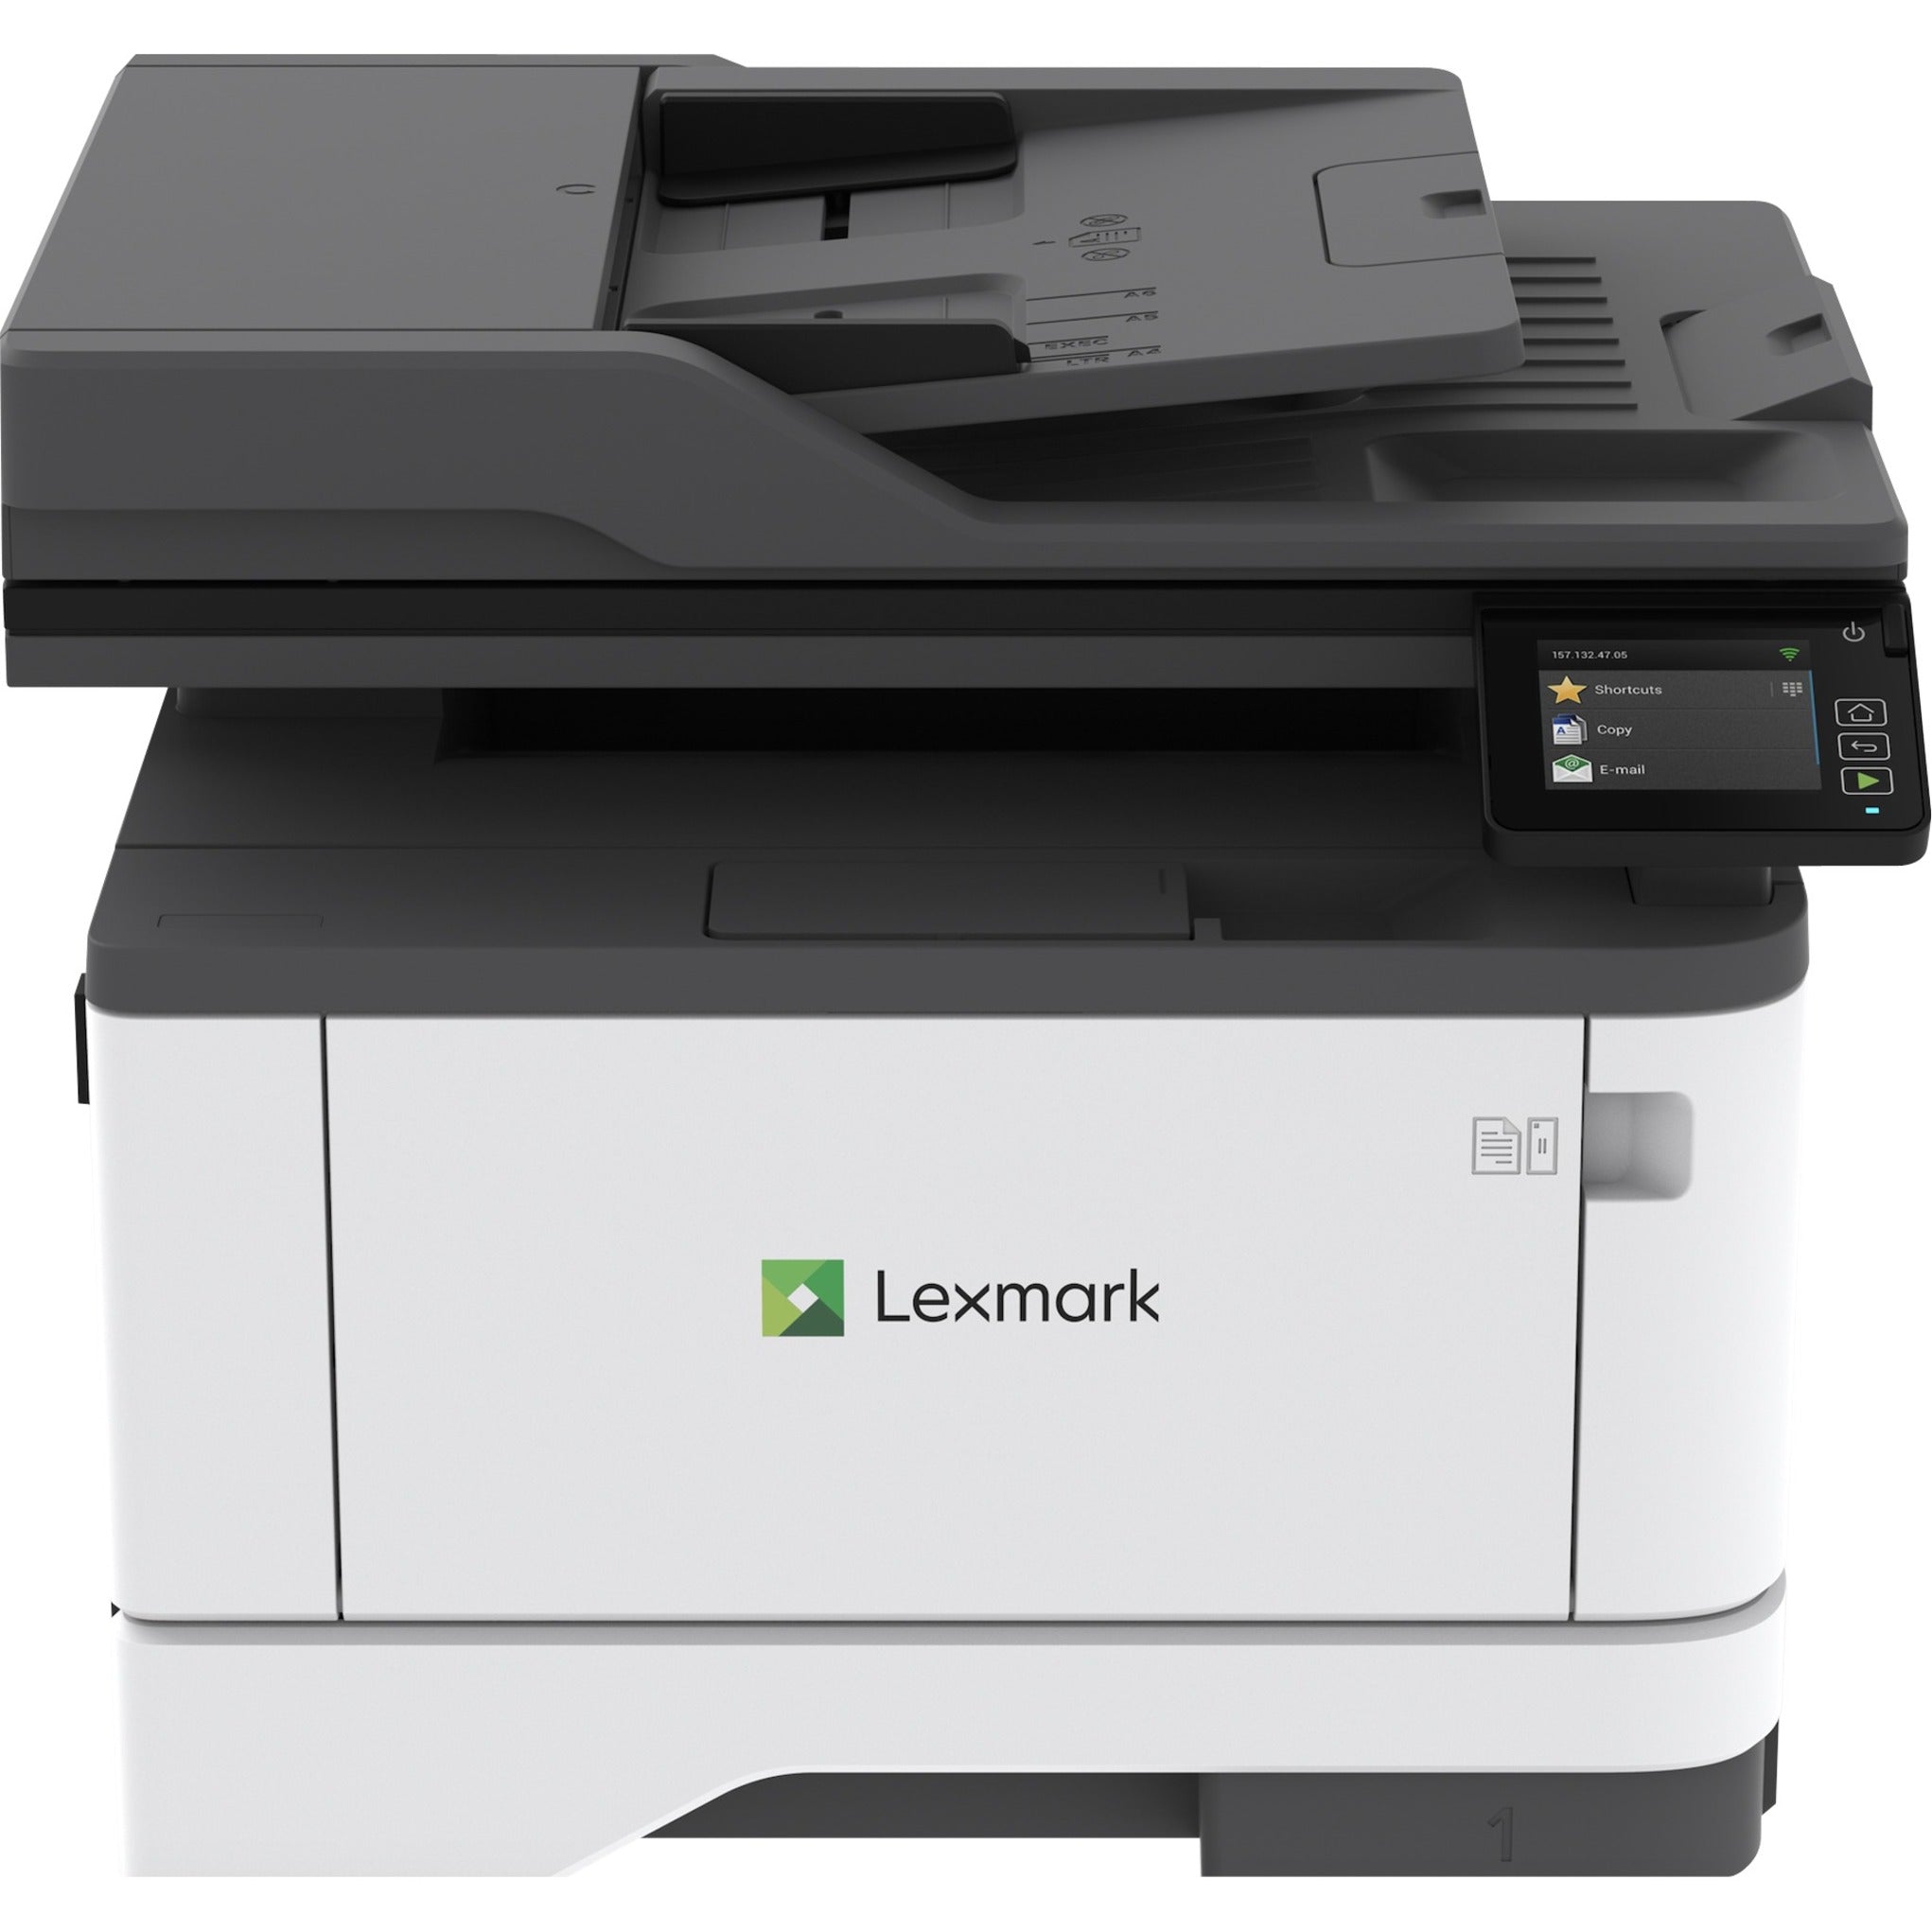 Lexmark 29ST011 MX431ADN Multifunction Laser Printer, Monochrome, Automatic Duplex Printing, 42 ppm, 600 x 600 dpi